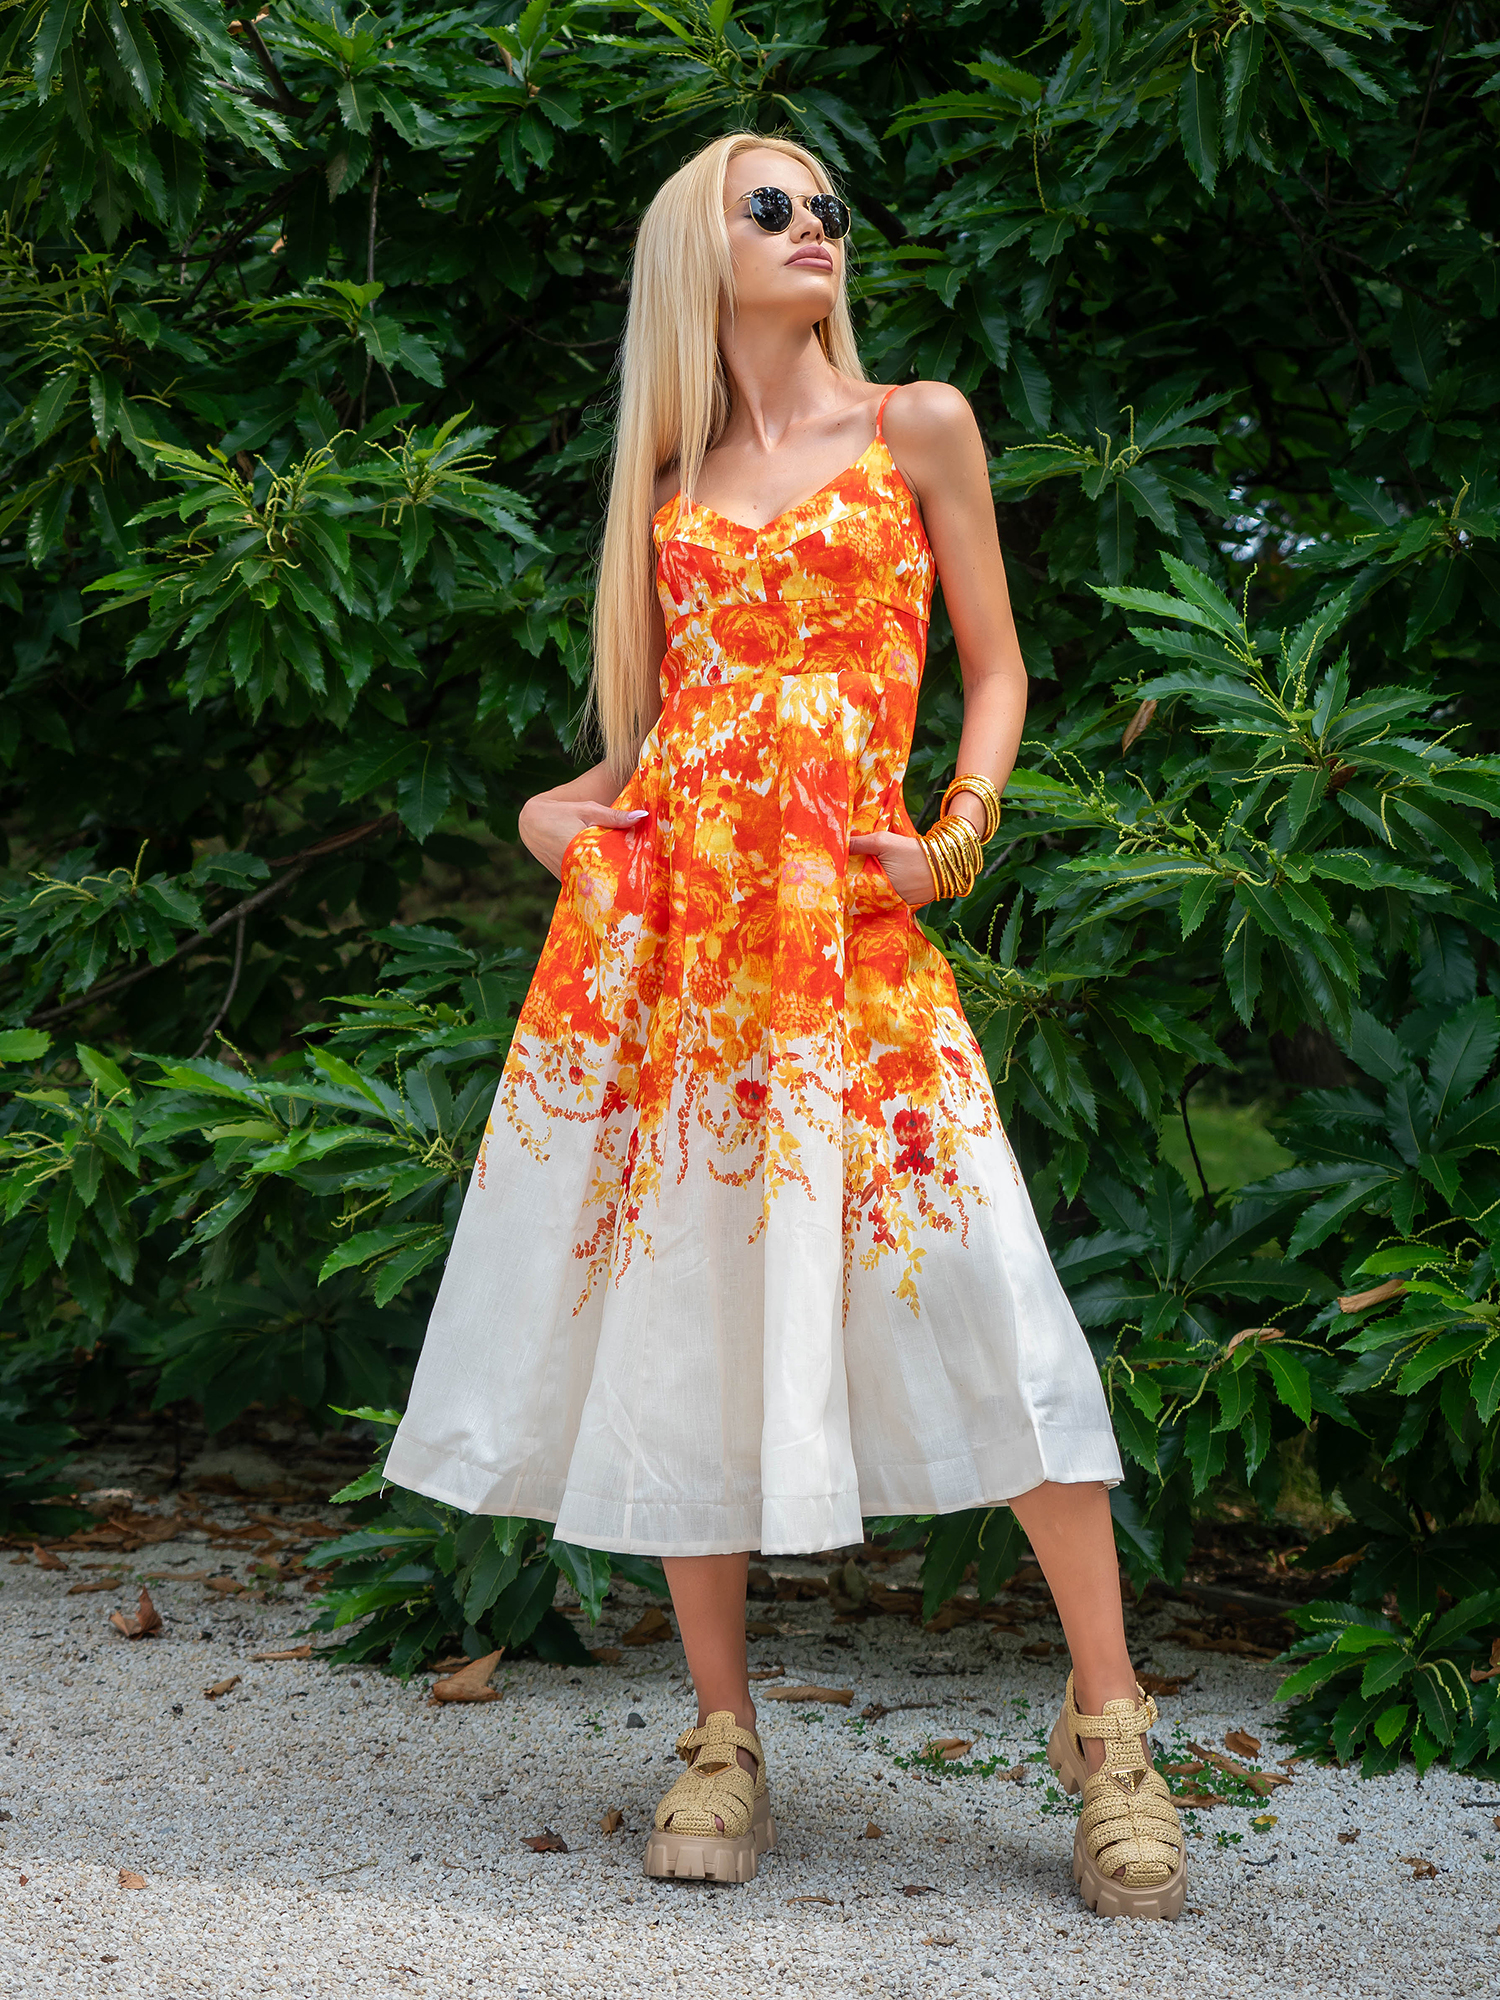 Дамска рокля с оранжеви мотиви